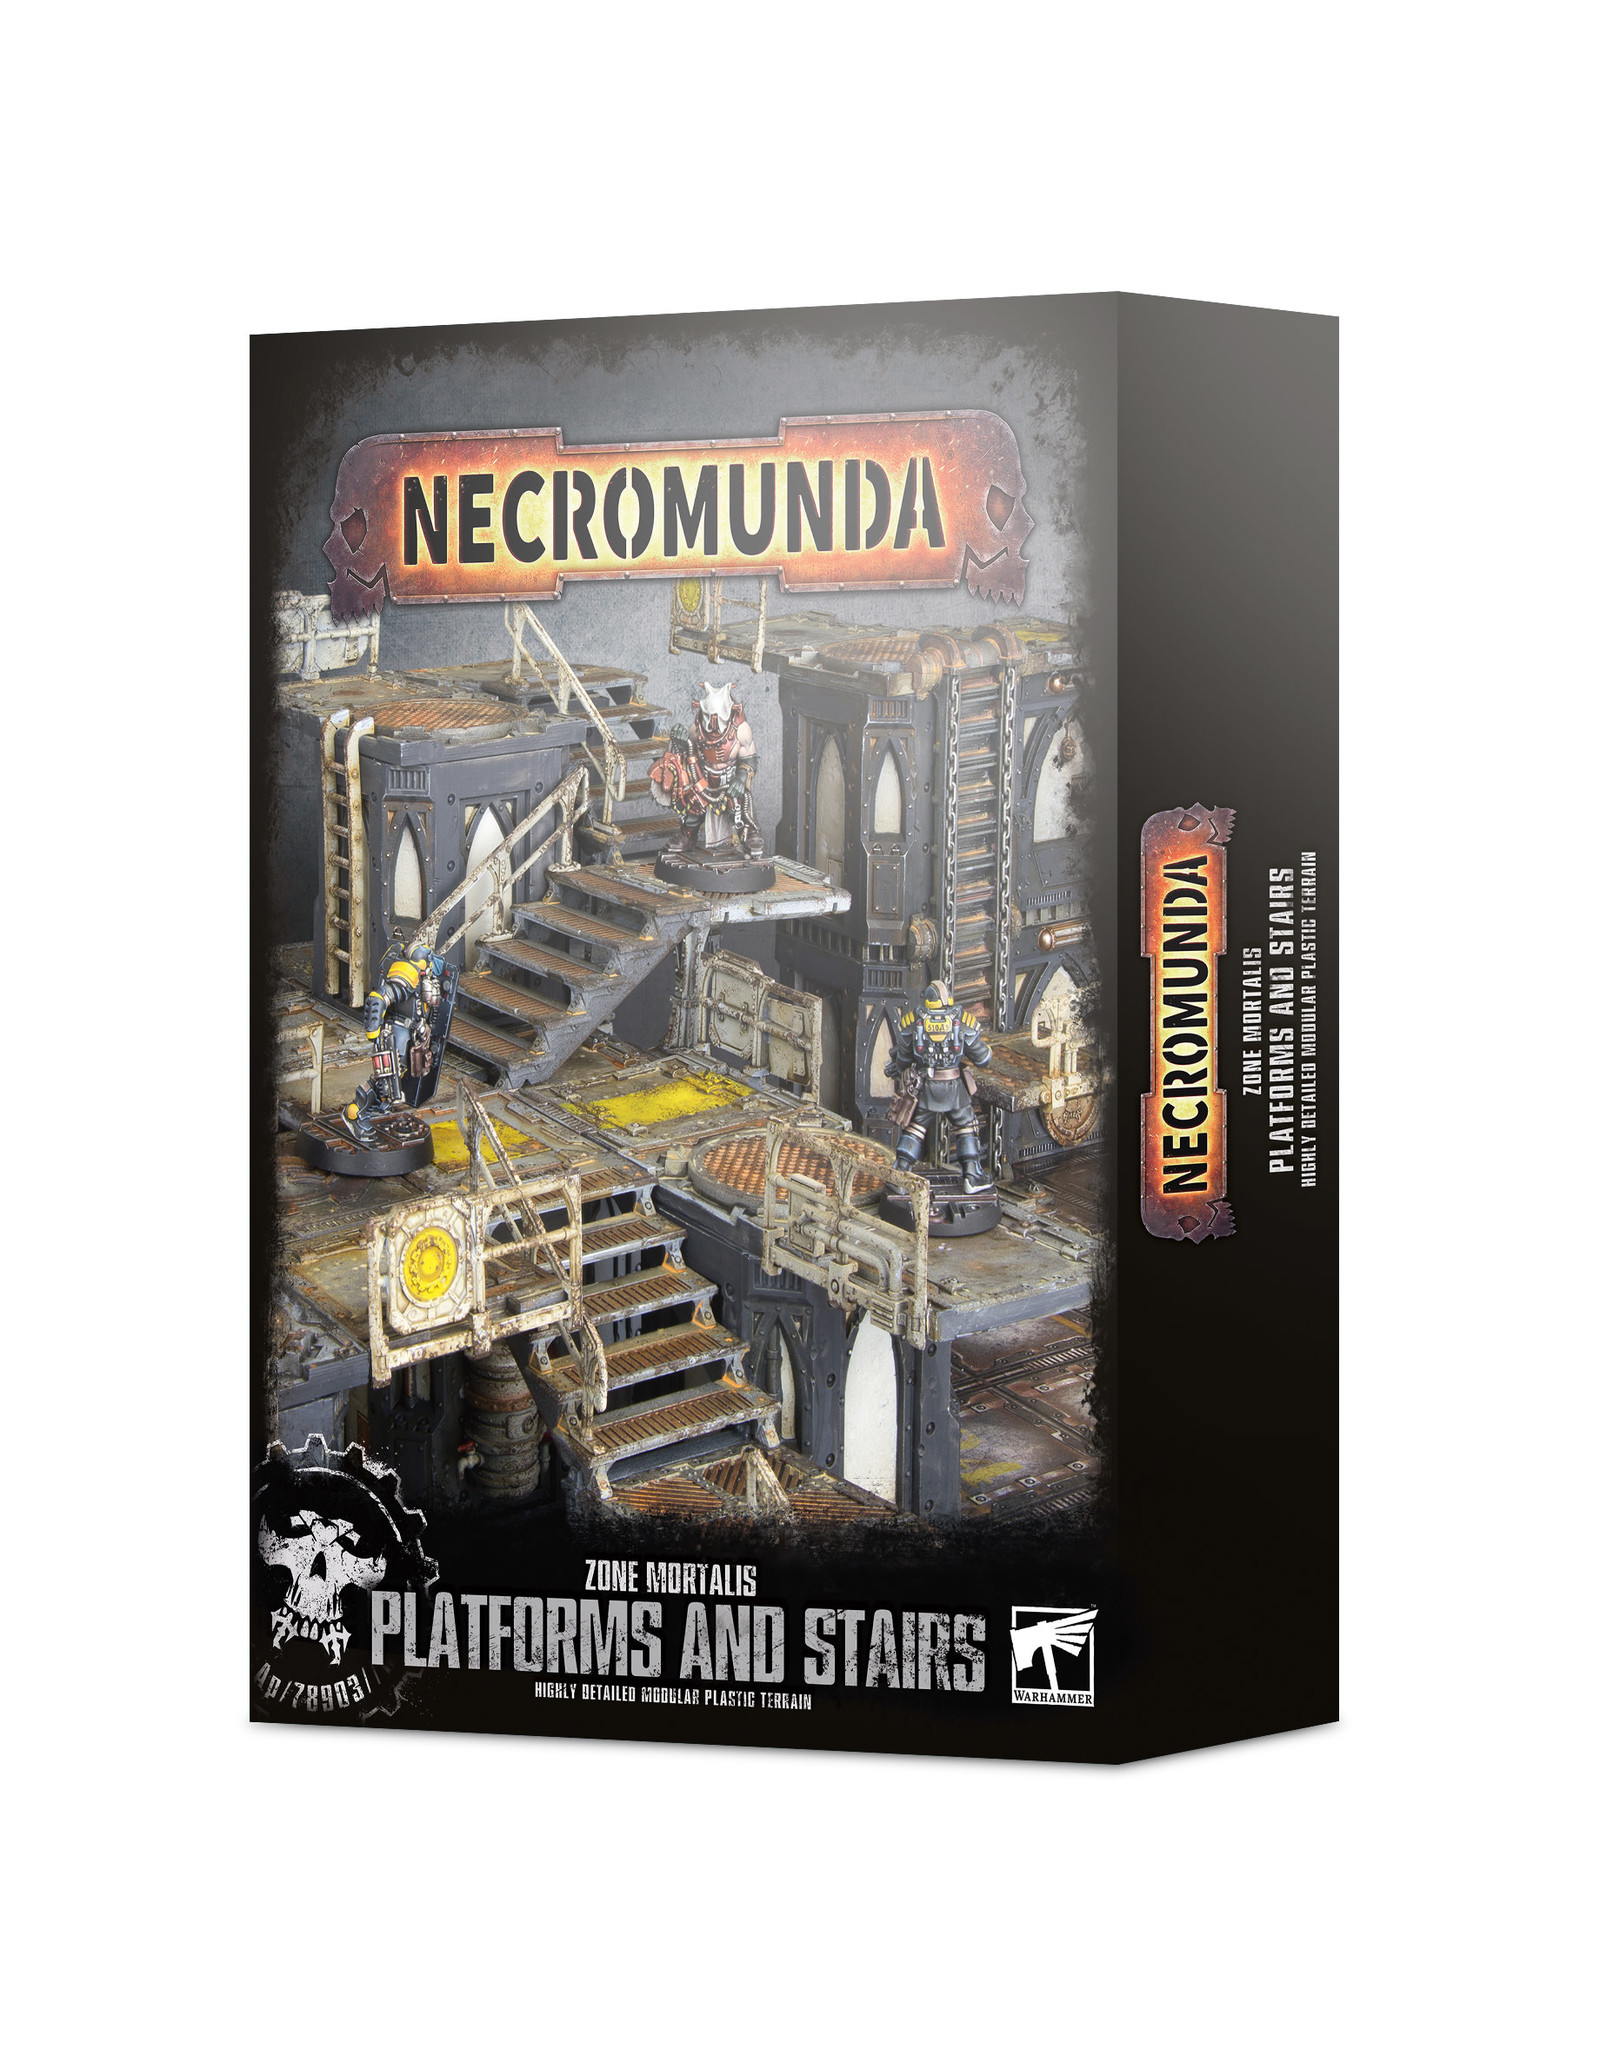 Games Workshop Necromunda Zone Mortalis Platforms and Stairs